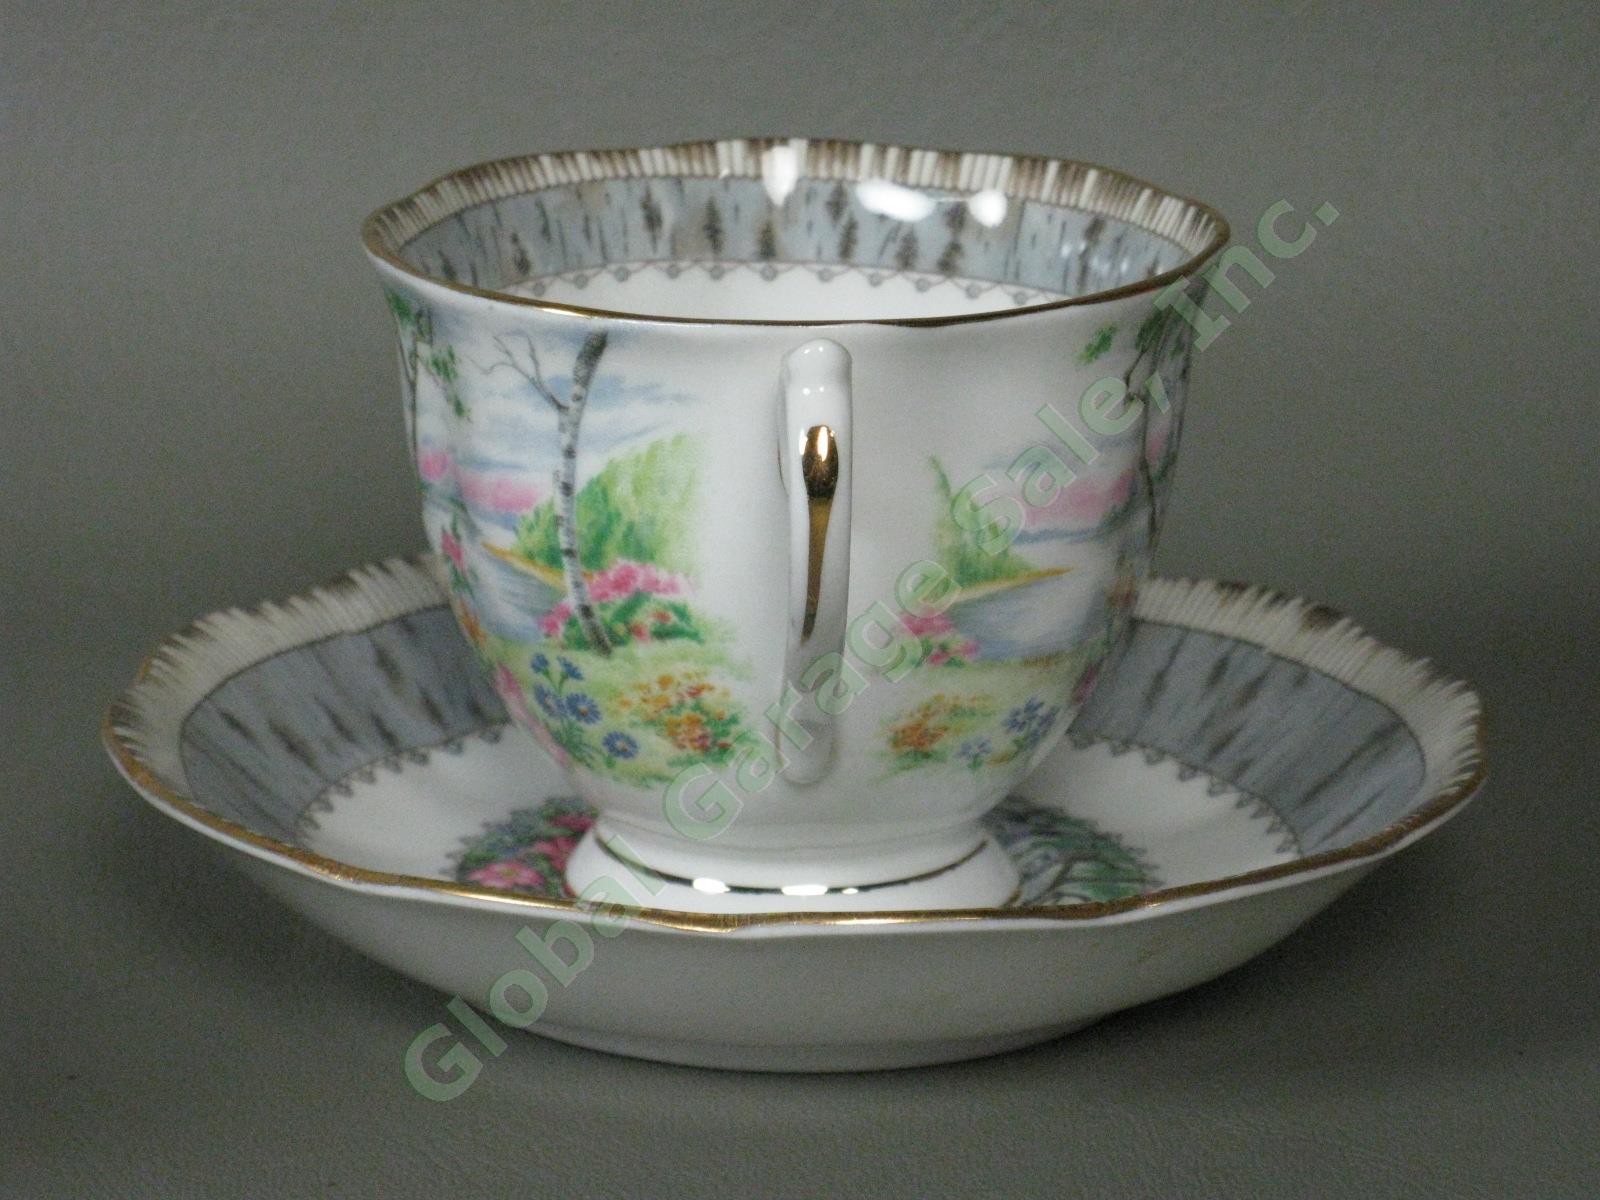 8 Vintage Royal Albert Silver Birch Bone China Teacups Tea Cups + Saucers Set NR 4